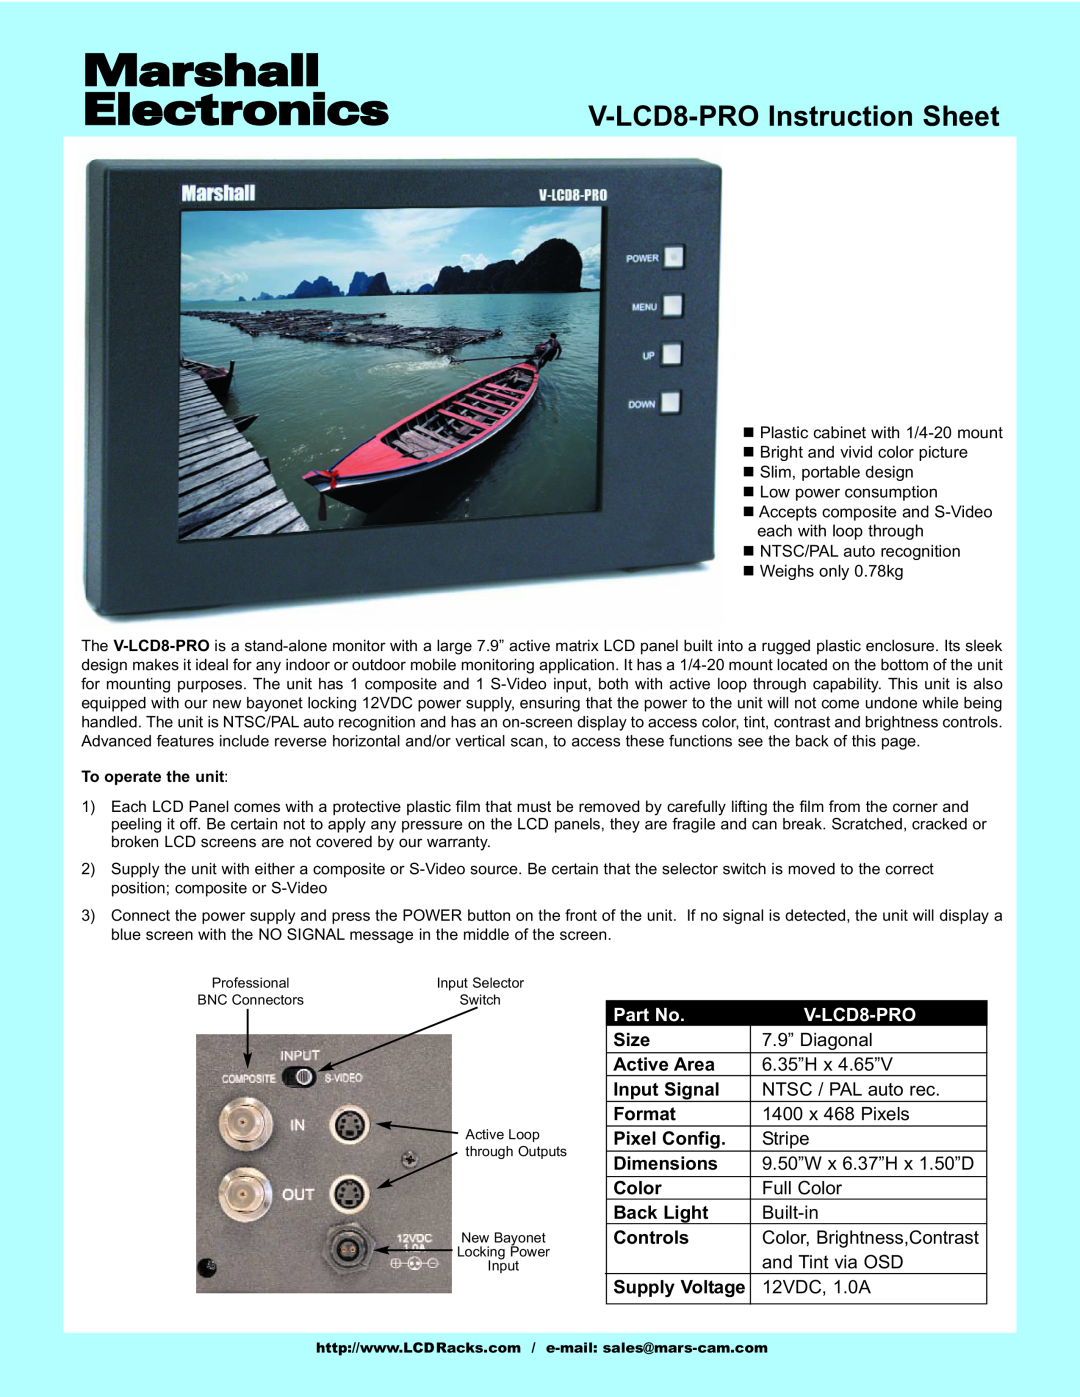 Marshall electronic instruction sheet Marshall Electronics, V-LCD8-PRO Instruction Sheet, Size, Active Area, Format 